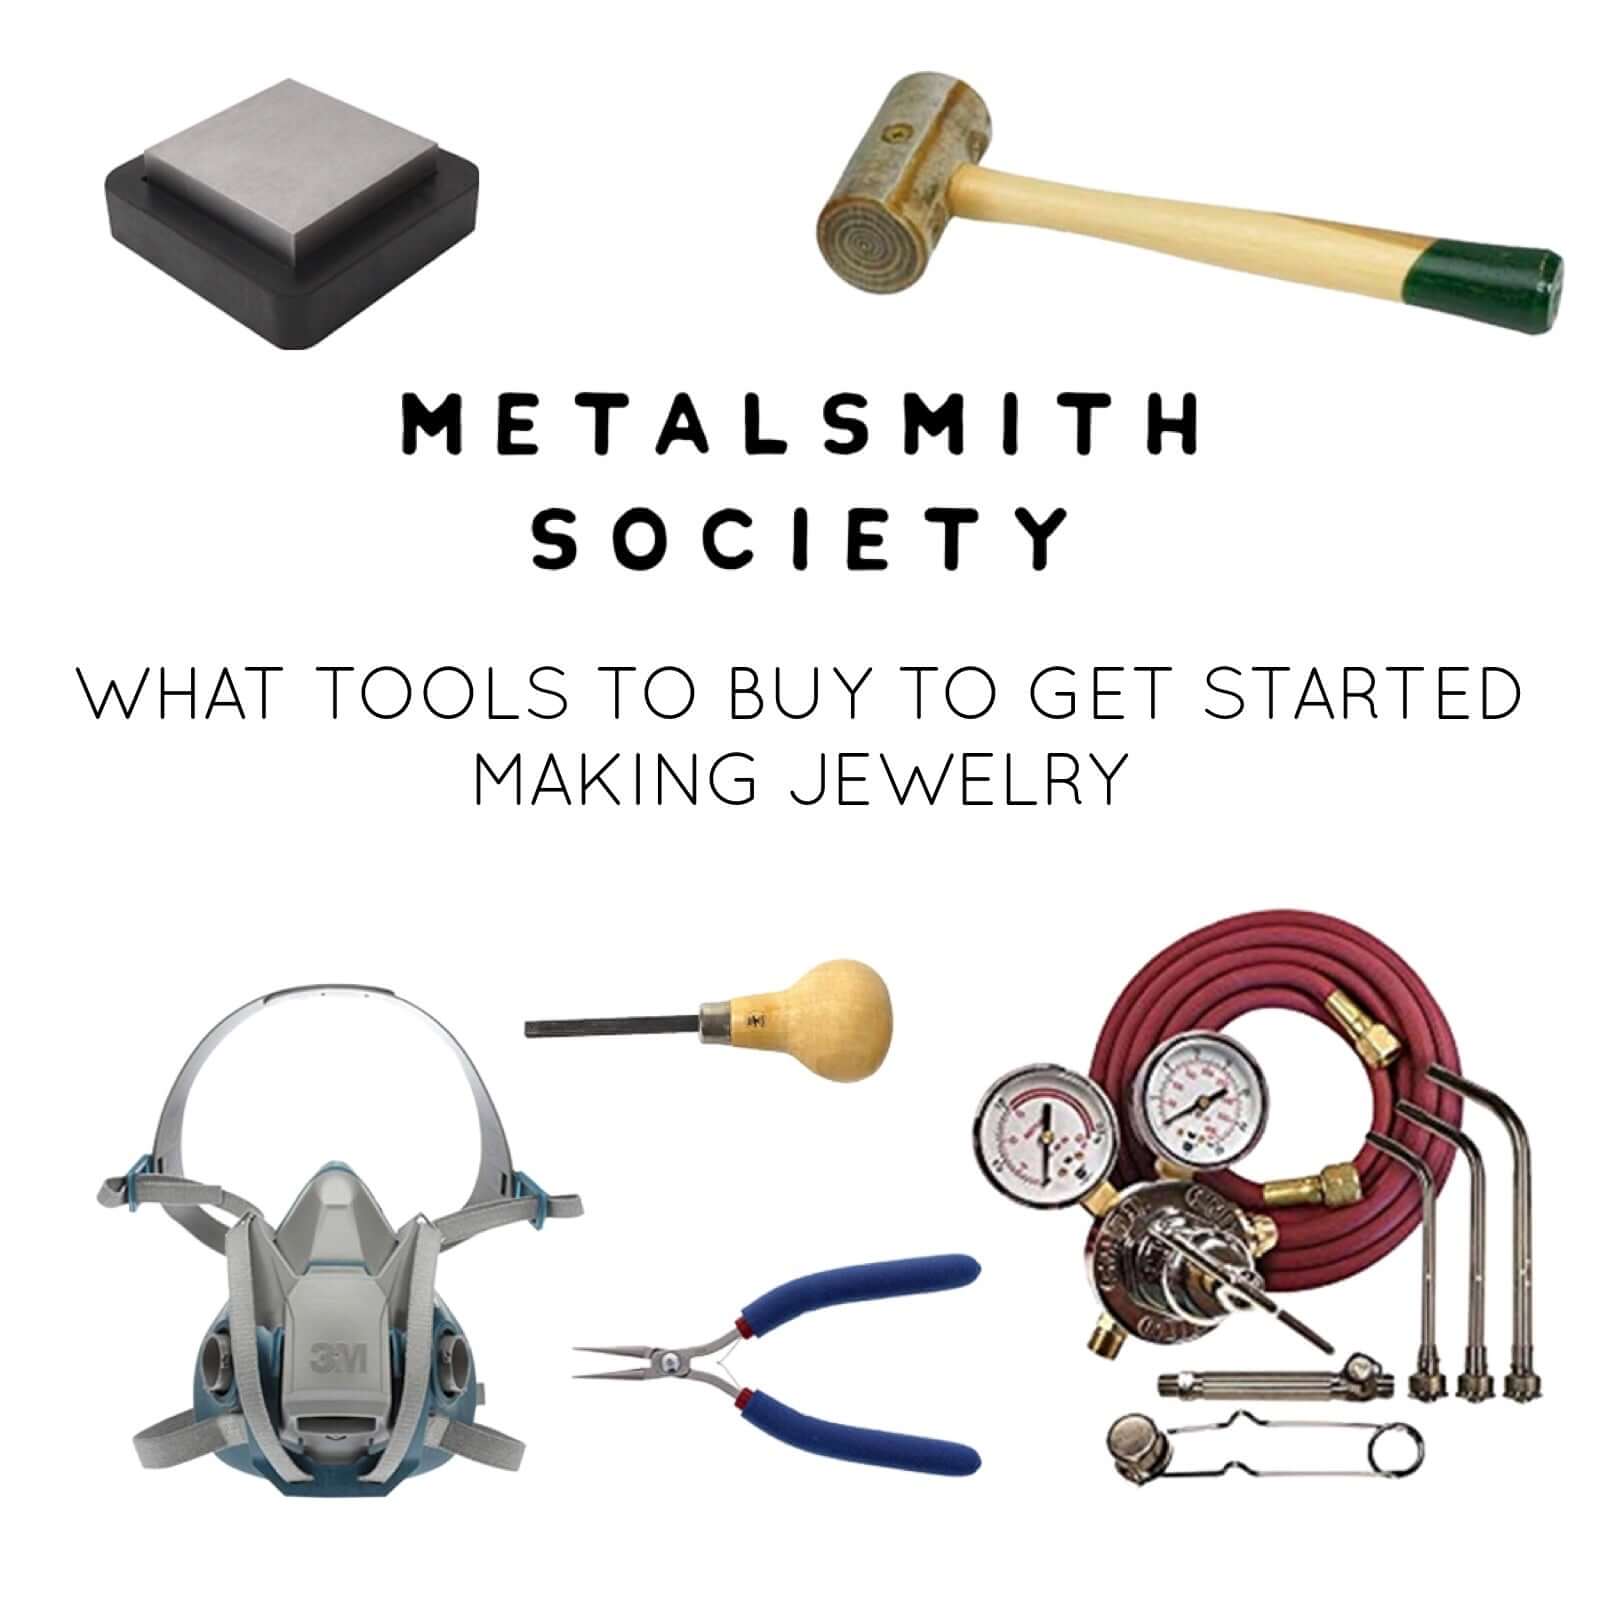 9-Piece Basic Soldering Kit Jewelry Making Metal Solder Repair